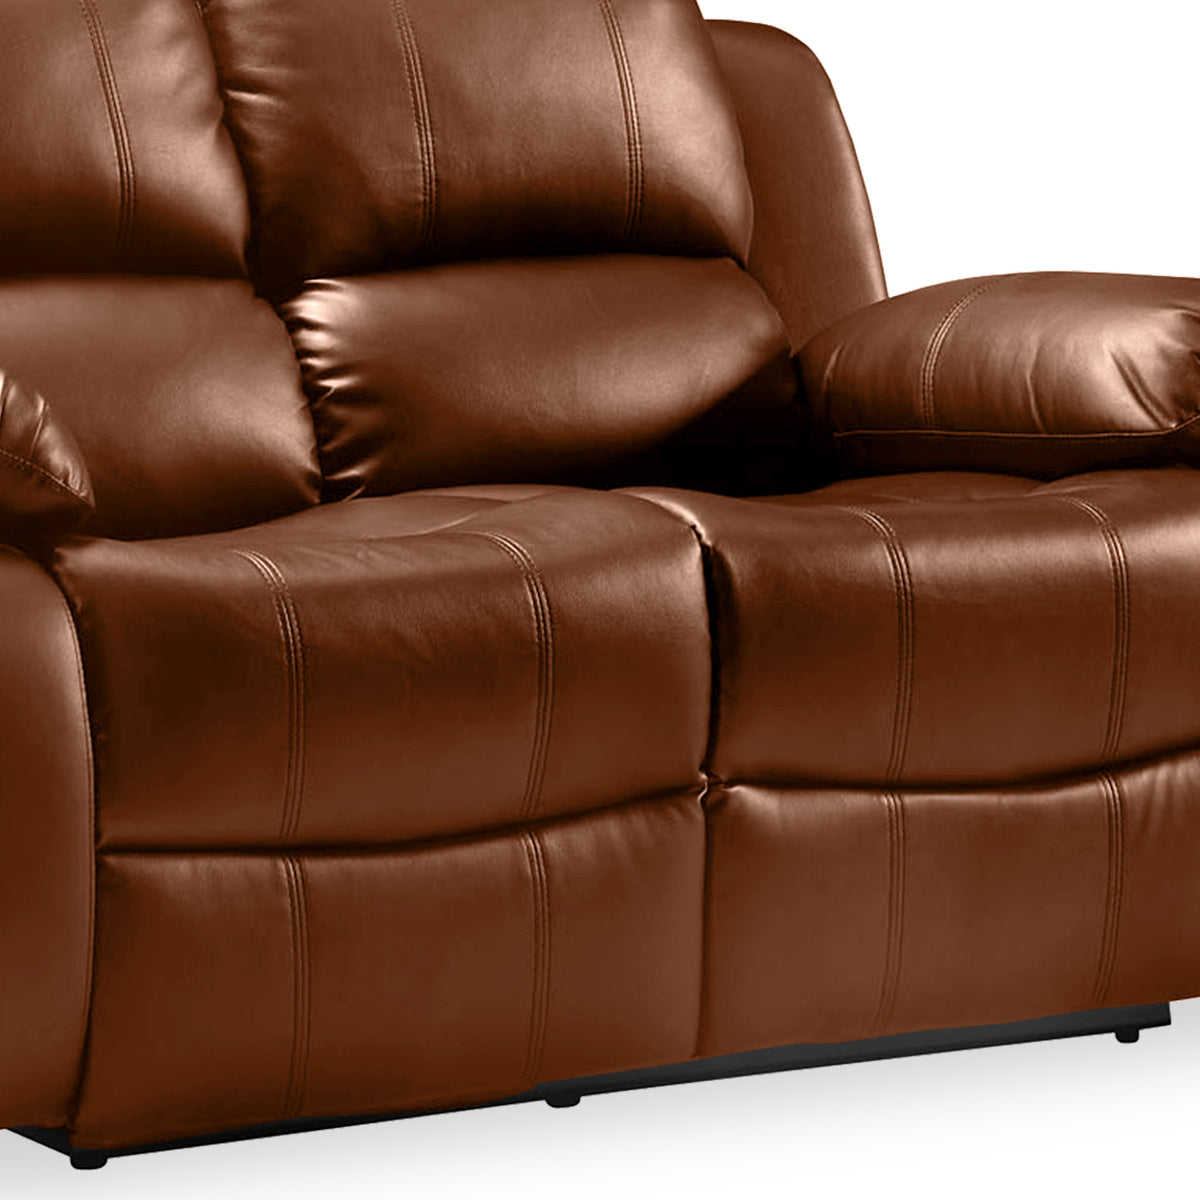 Valencia Tan 2 Seater Reclining Leather Sofa